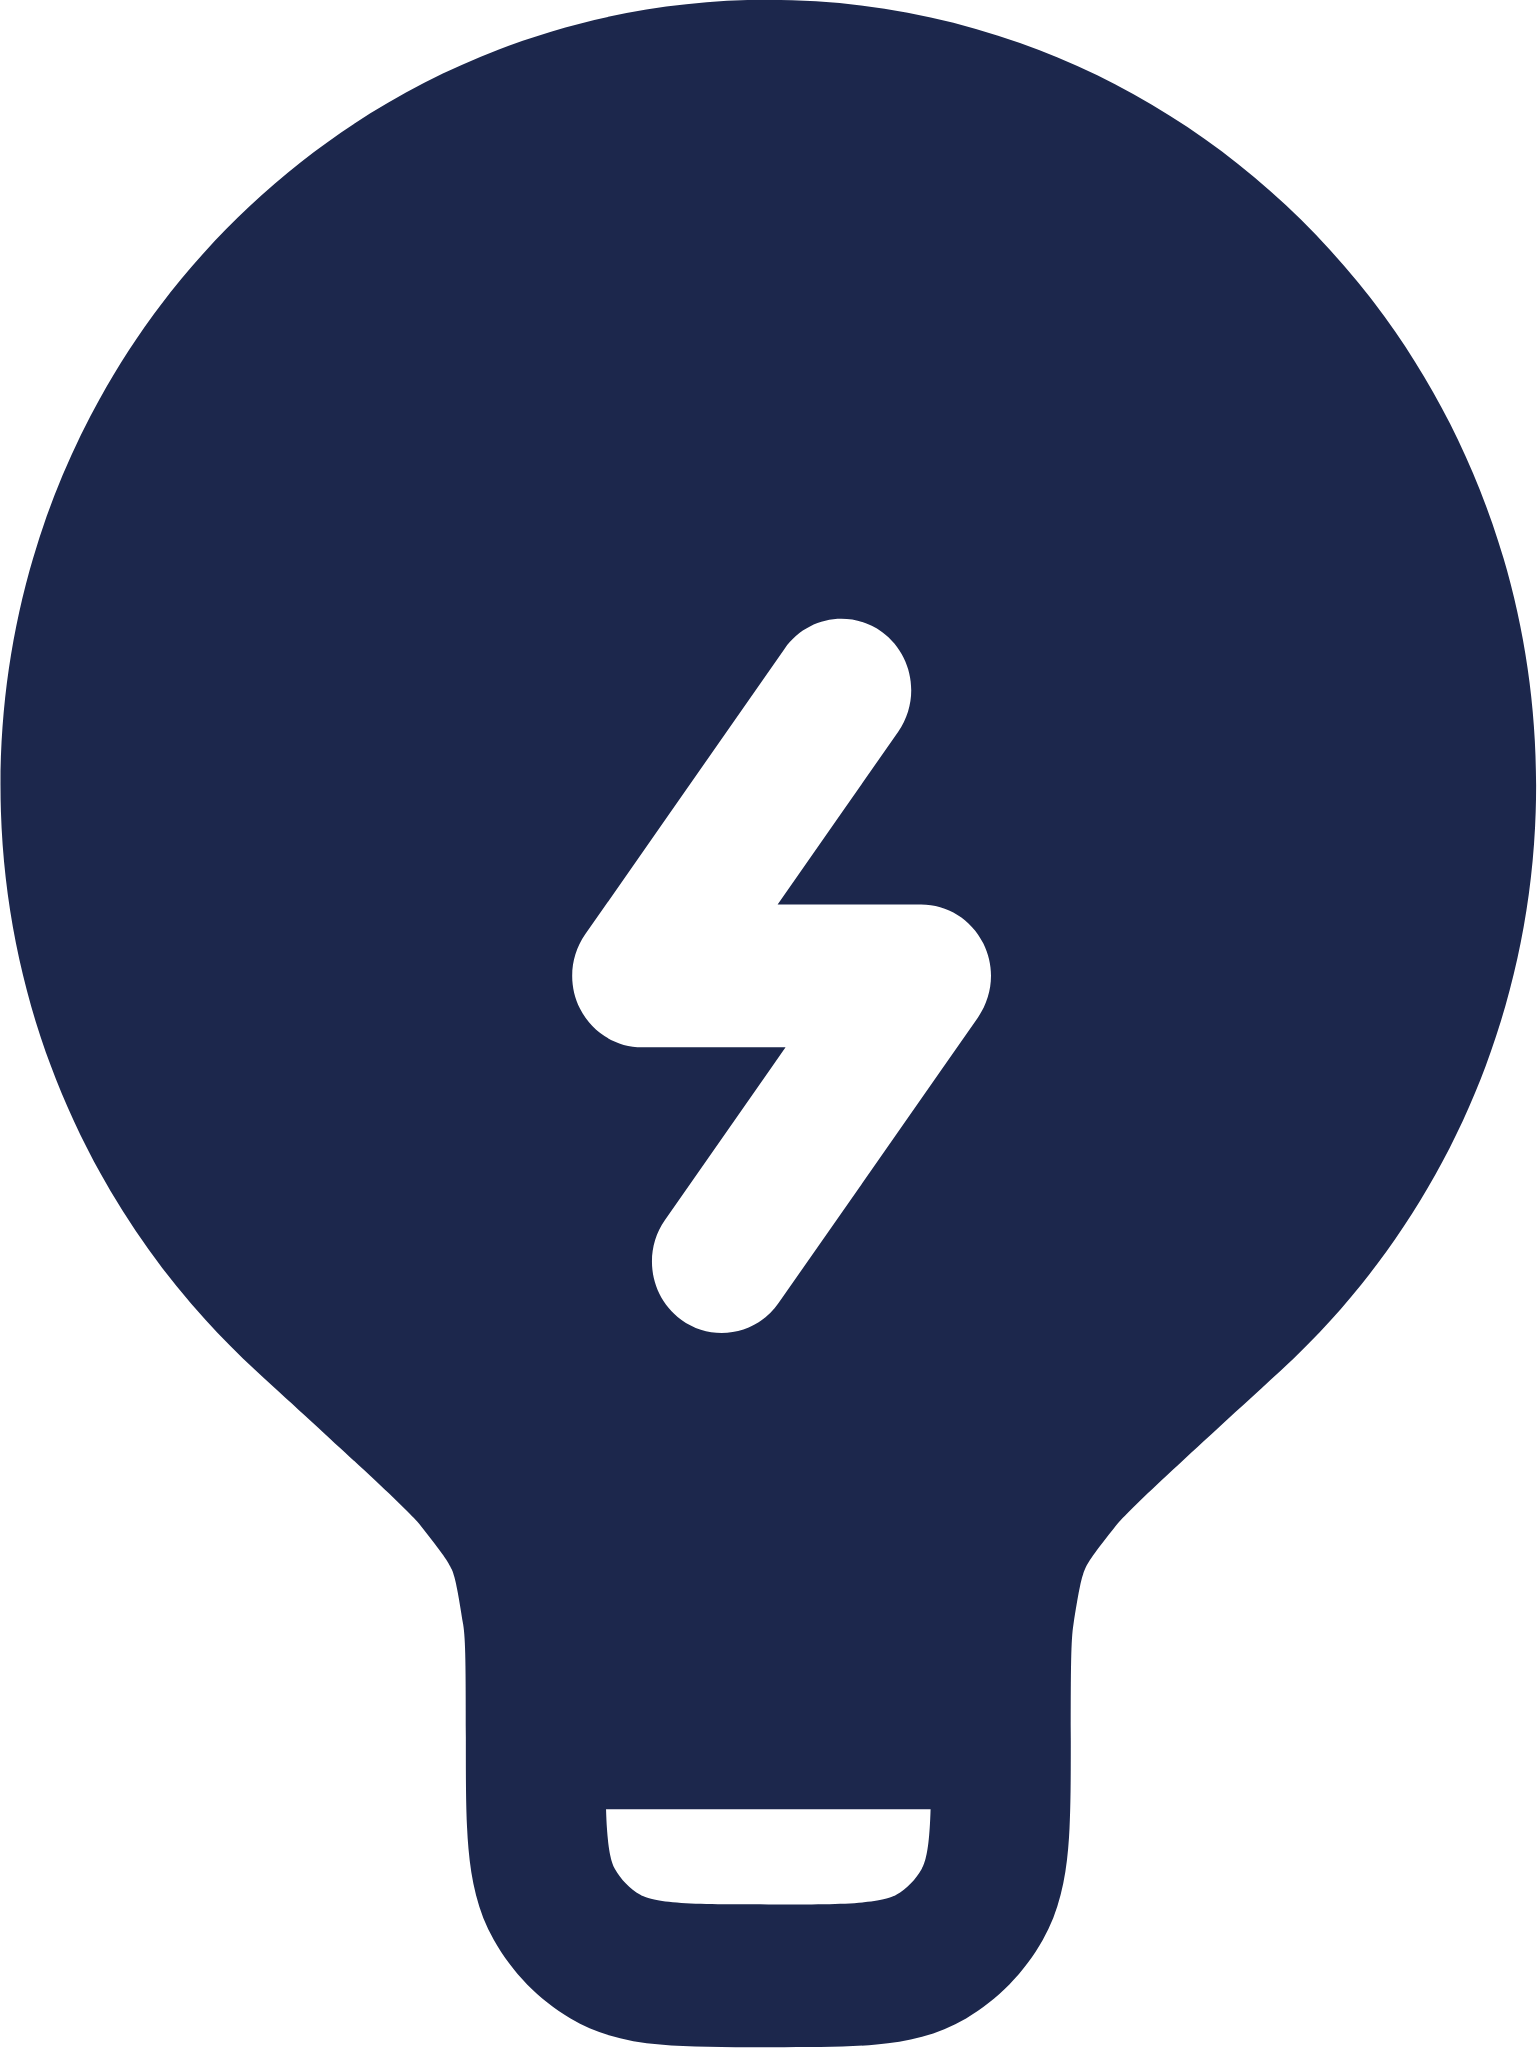 Lightbulb Bolt icon